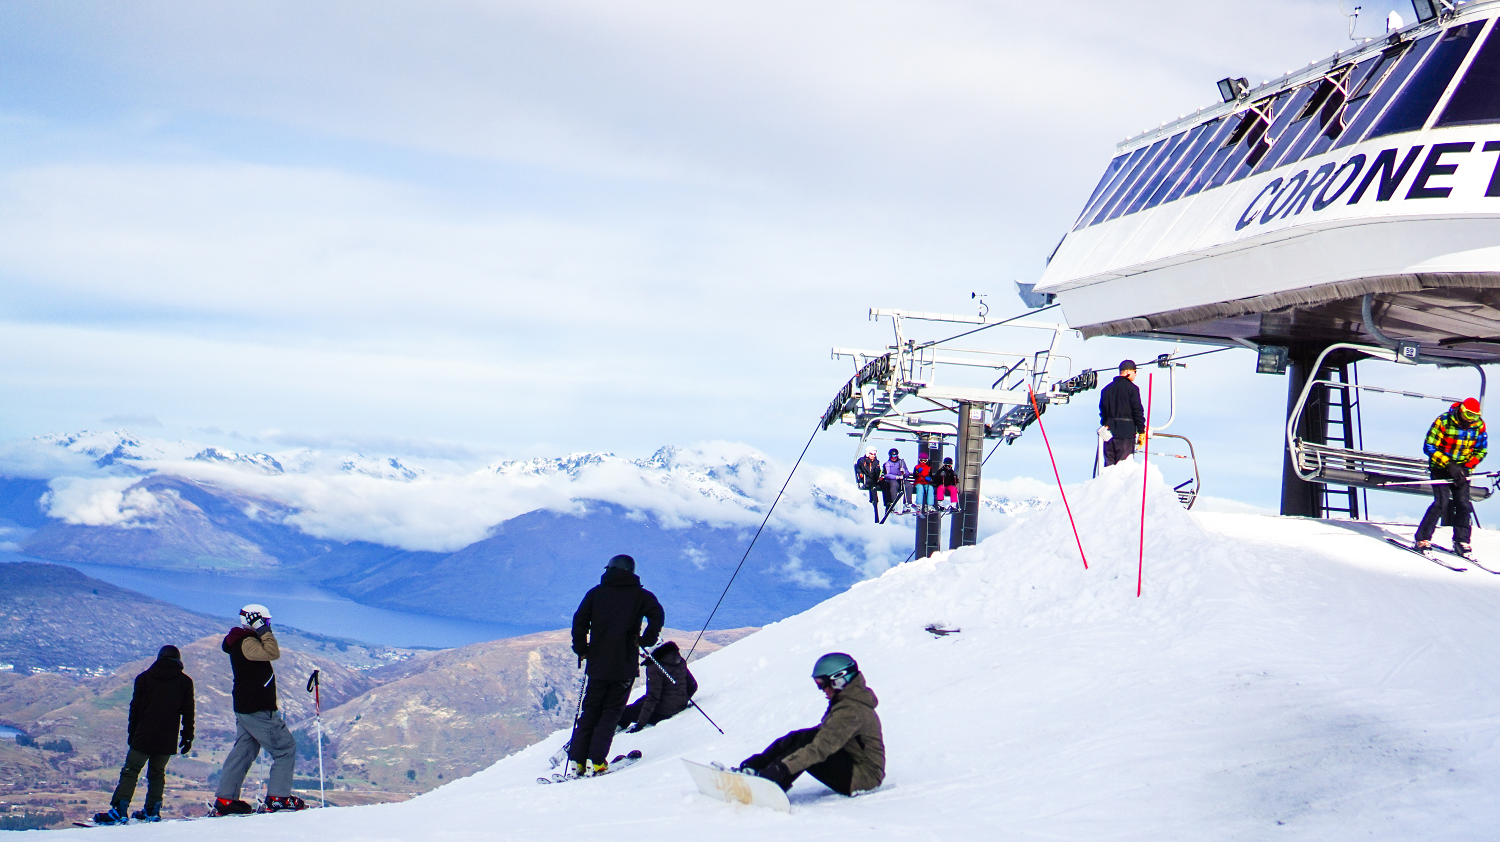 Coronet Express skiing views